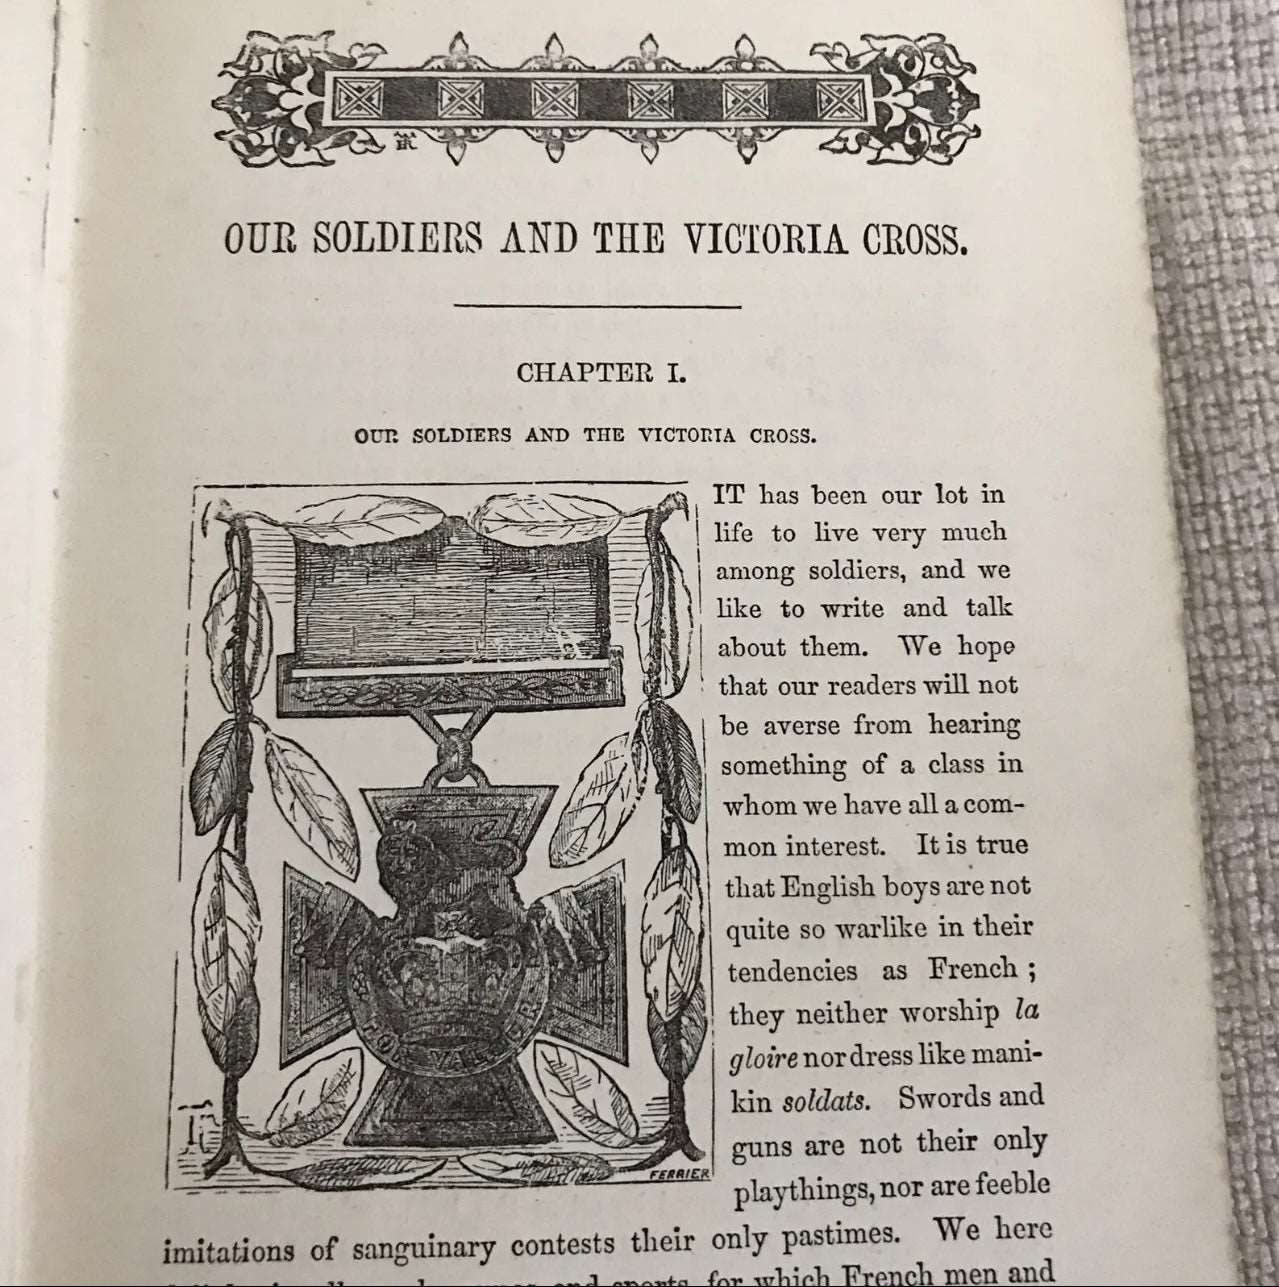 1863c Brave British Soldiers & The Victoria Cross (Ward, Lock & Co) Honeyburn Books (UK)